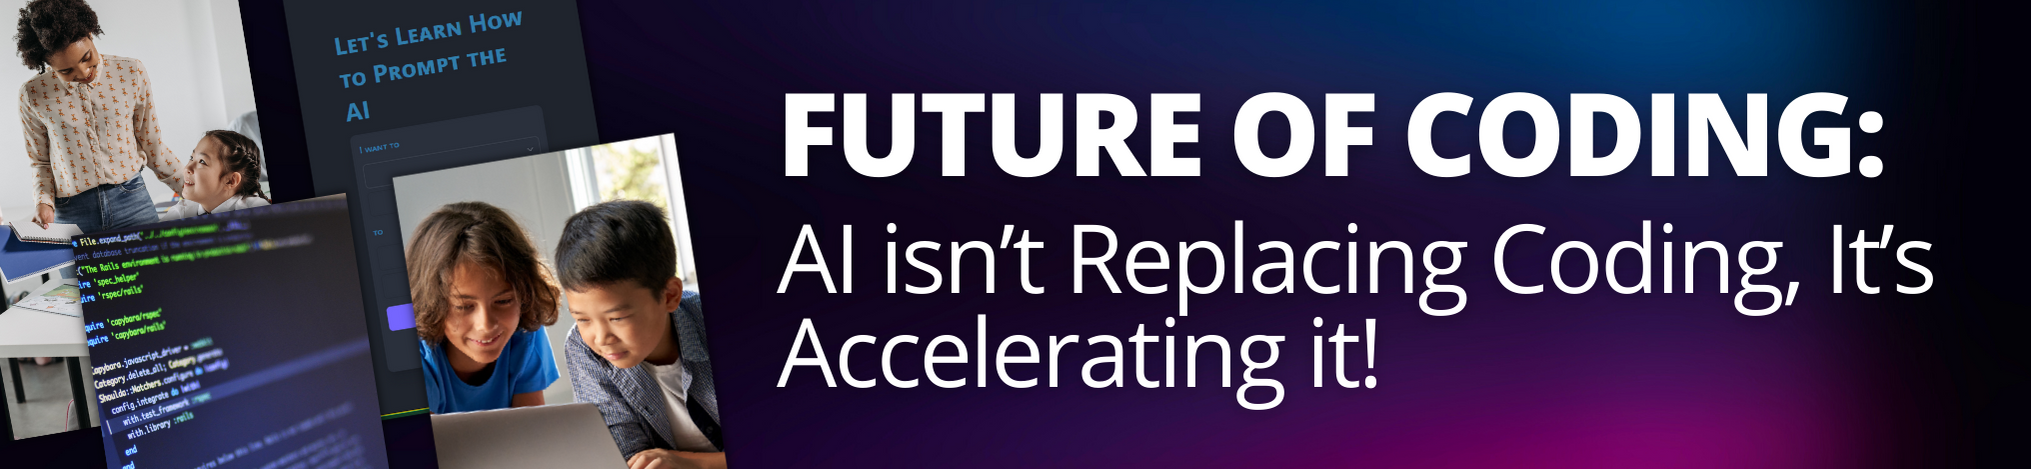 AI isn’t Replacing Coding, It’s Accelerating it!